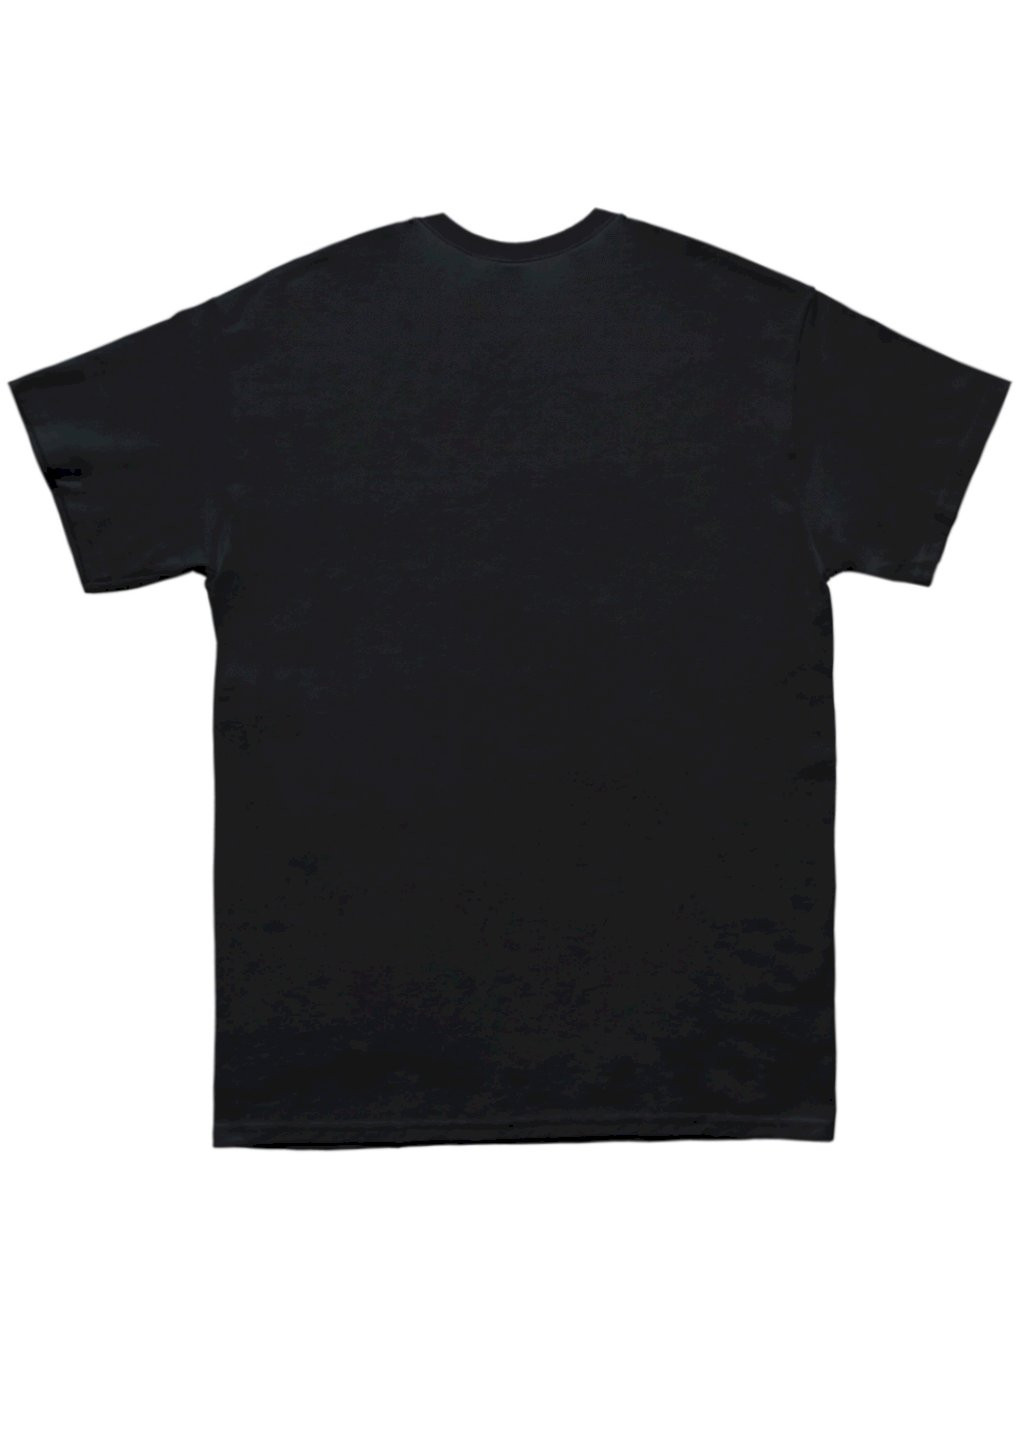 Черная футболка мужская черная "deep space" Trace of Space